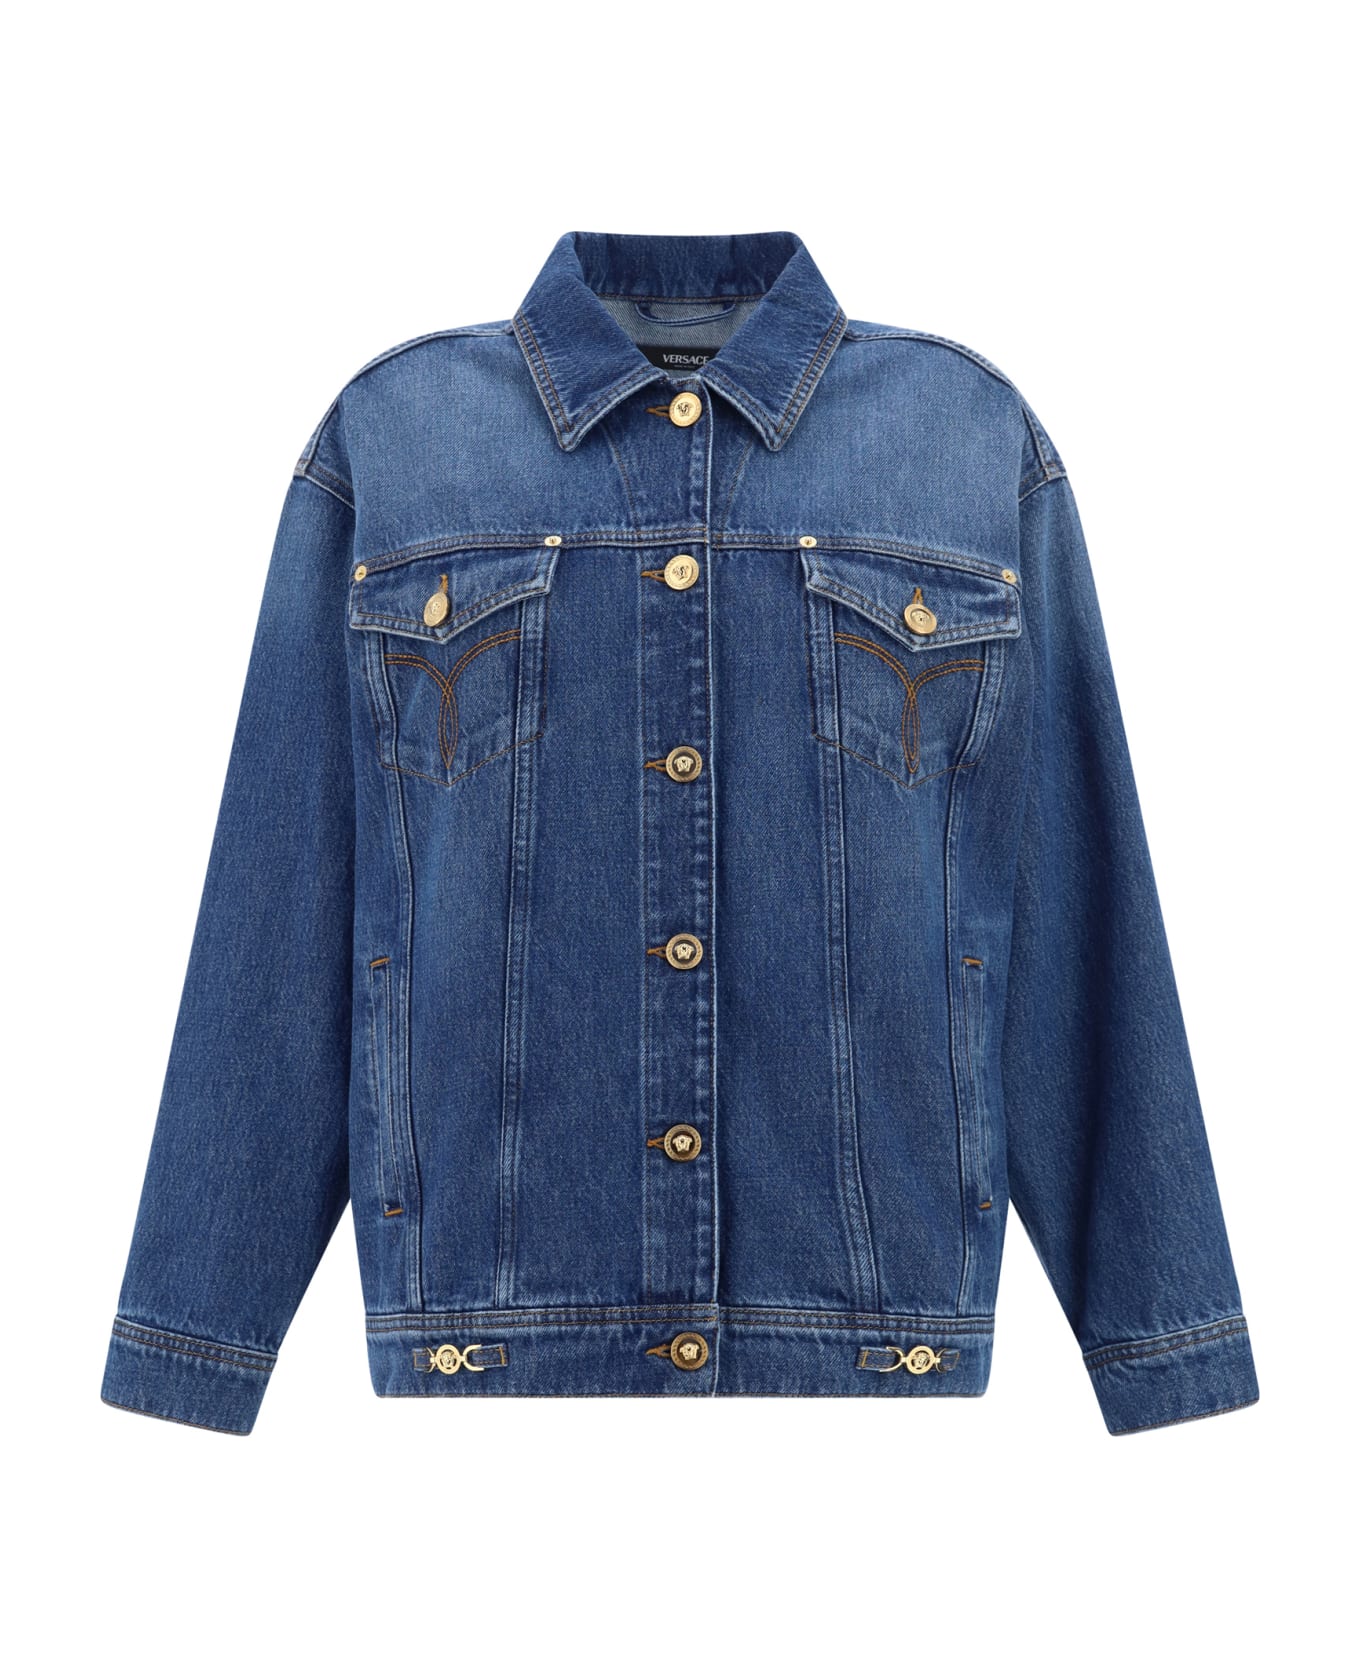 Versace Denim Jacket - Medium Blue ジャケット